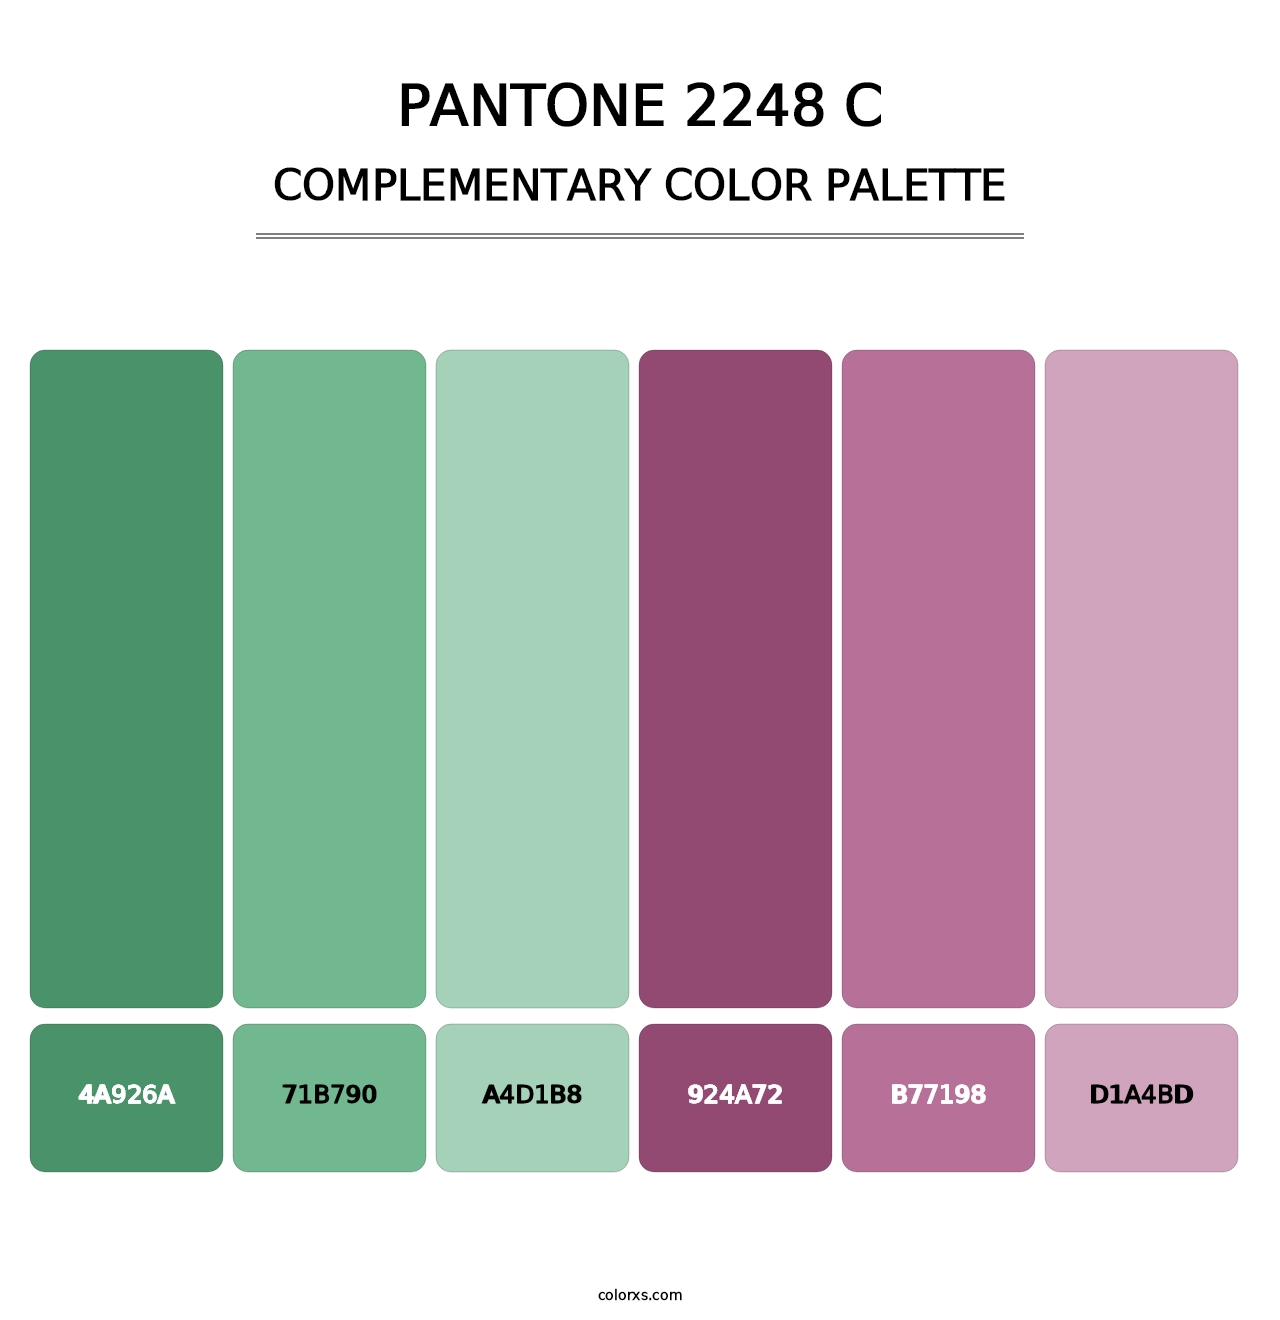 PANTONE 2248 C - Complementary Color Palette